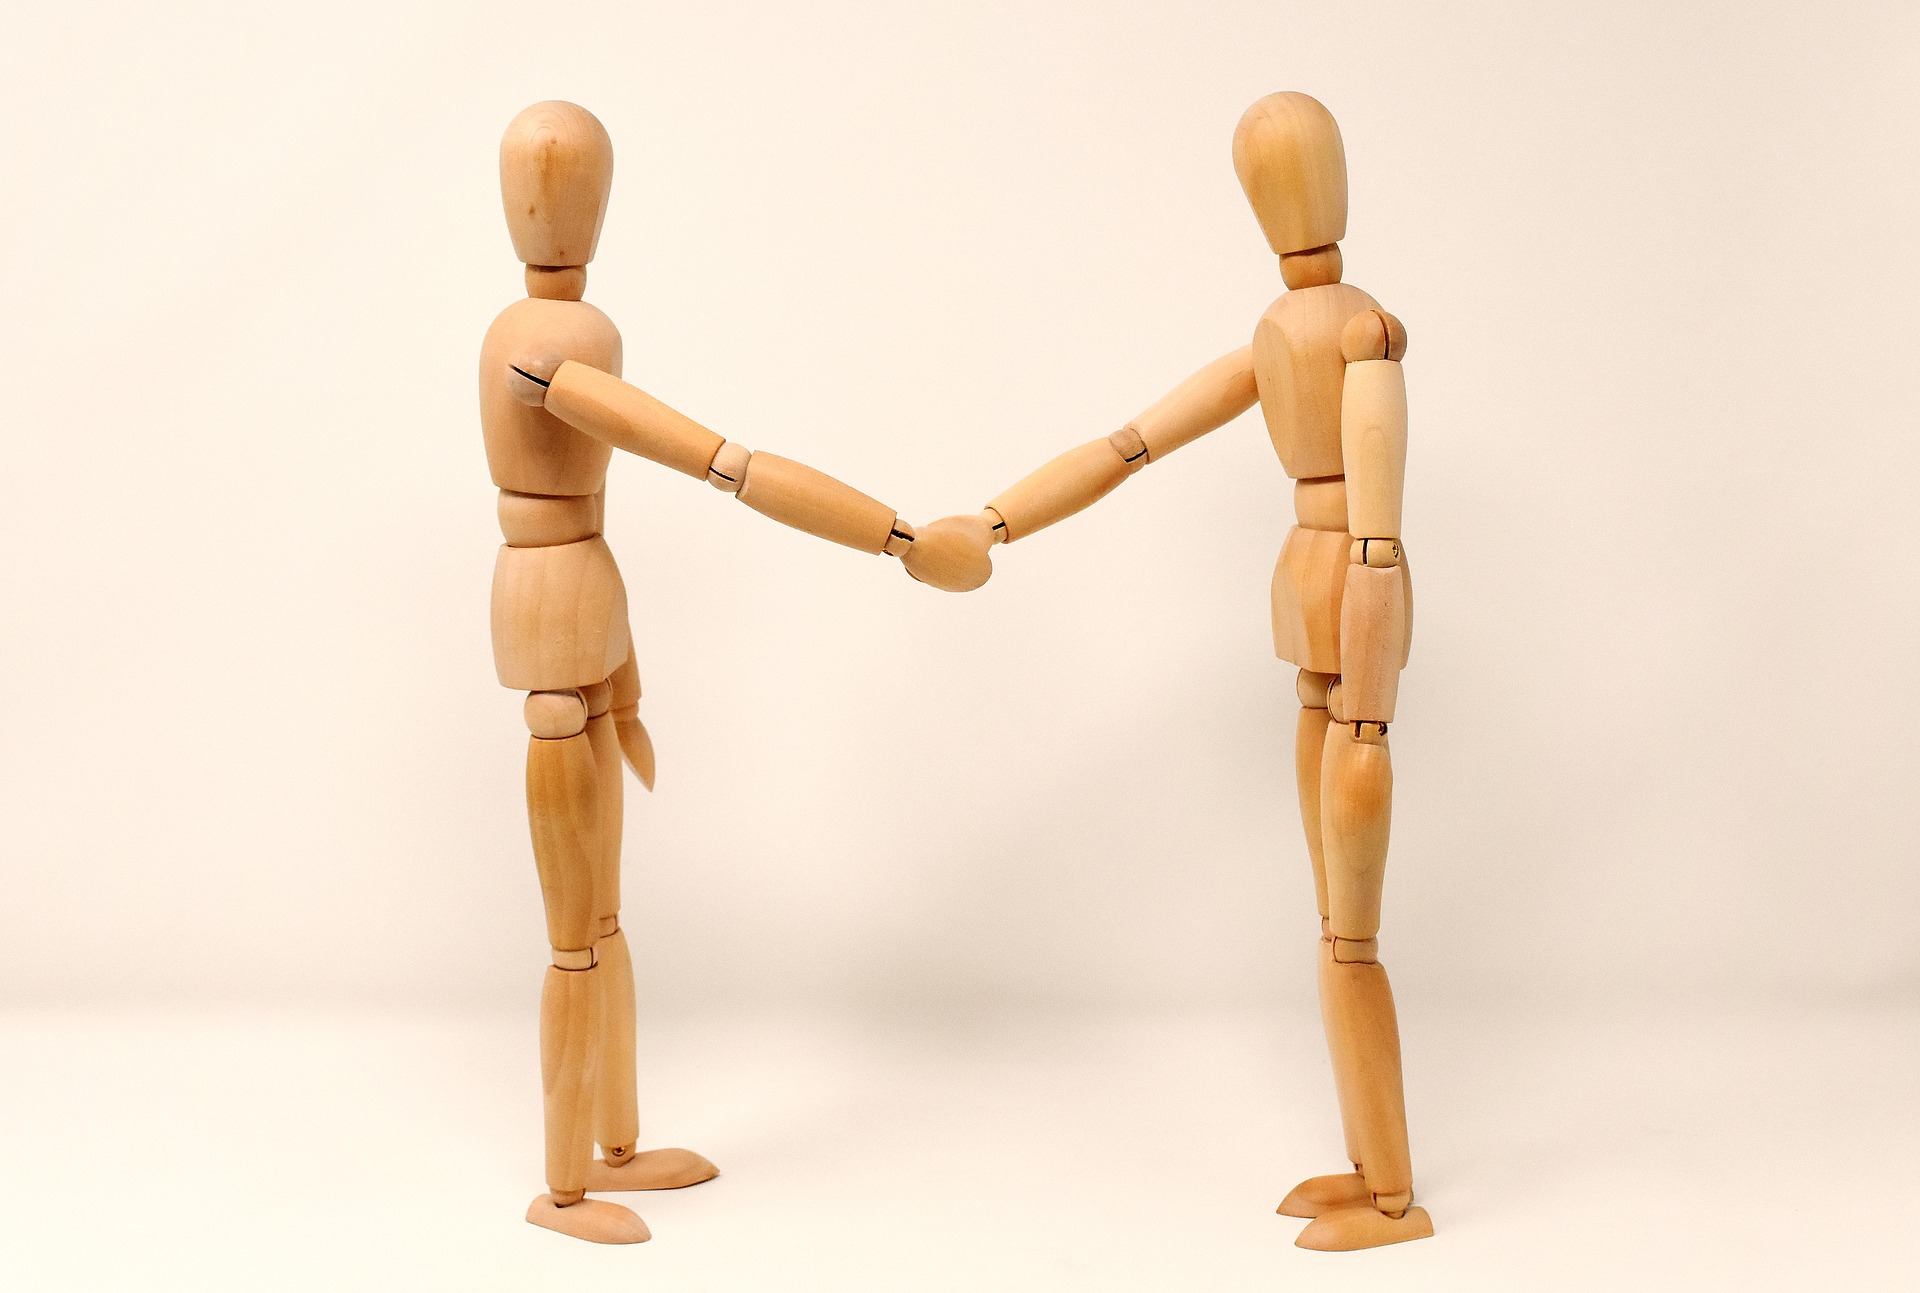 How is Your Business Handshake?